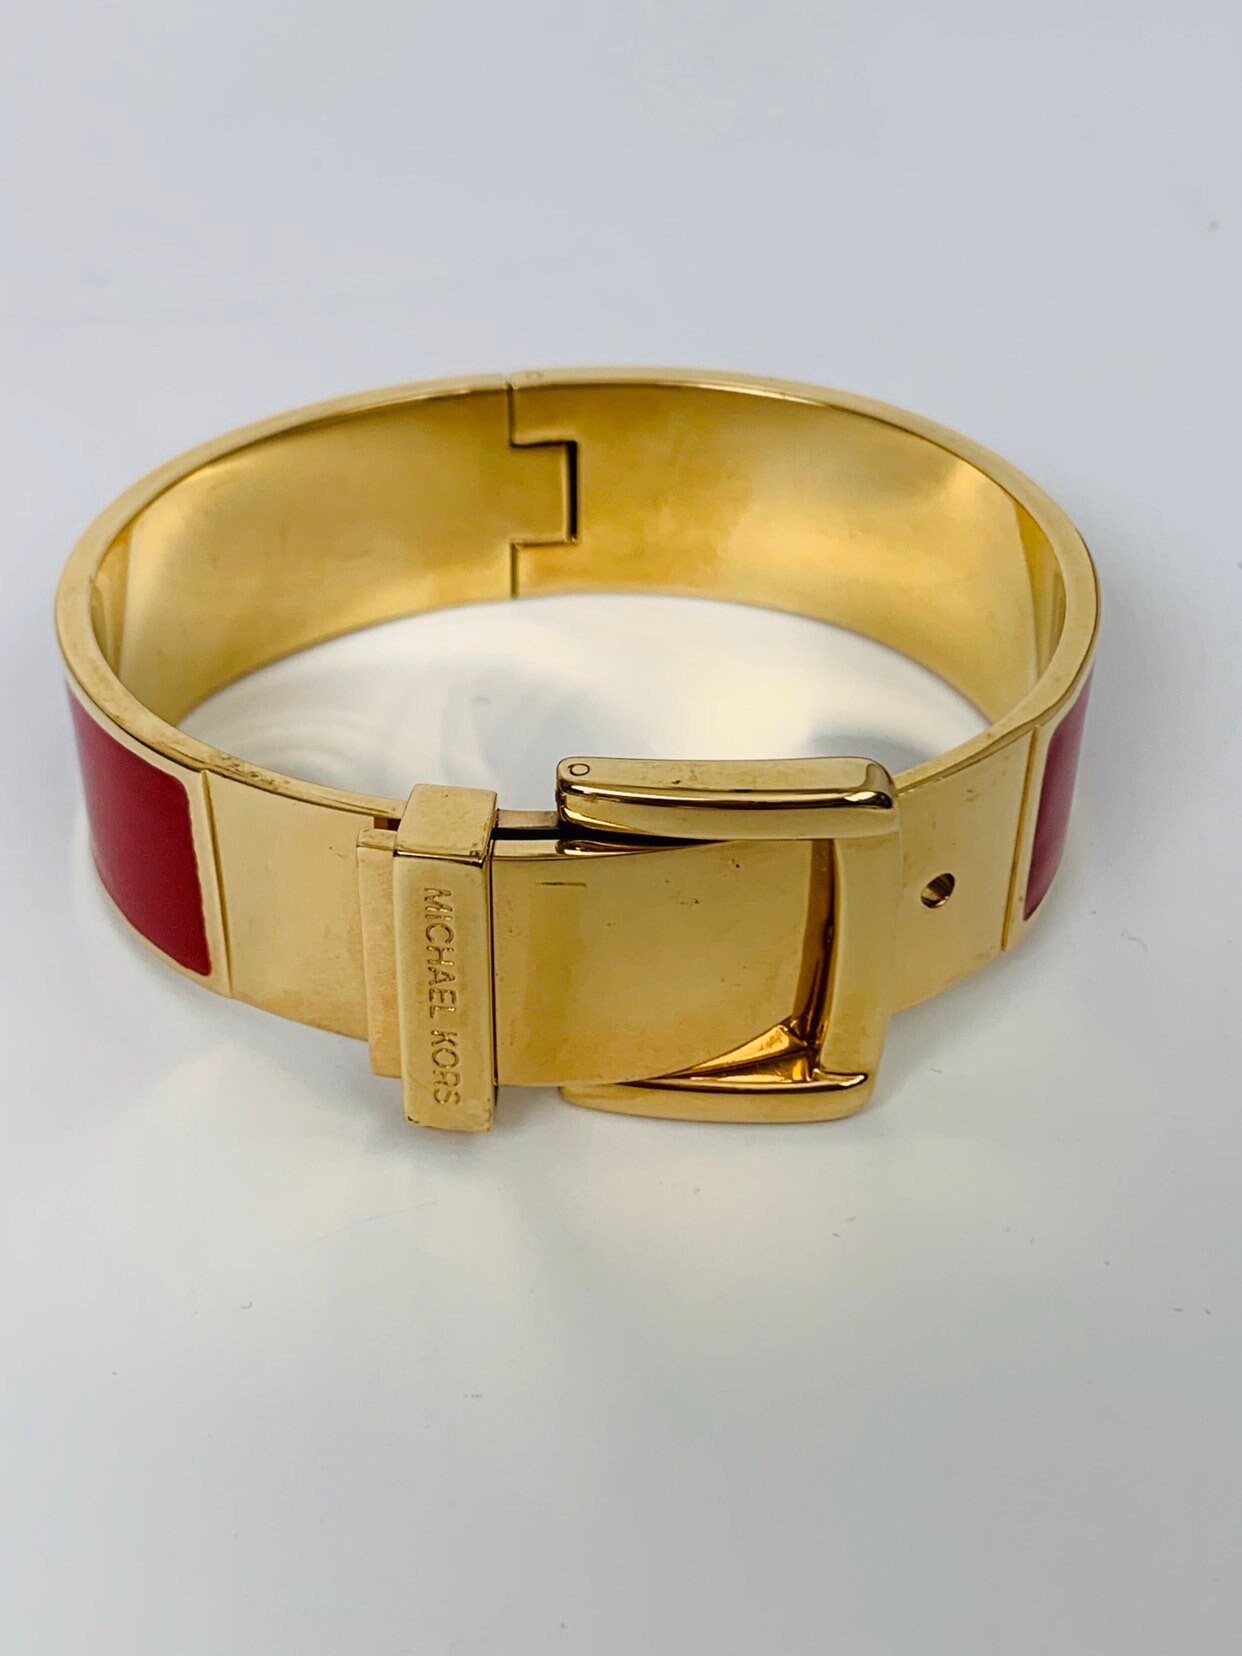 Vintage Michael Kors Gold Tone and Red Belt Buckle Bracelet - Etsy New  Zealand